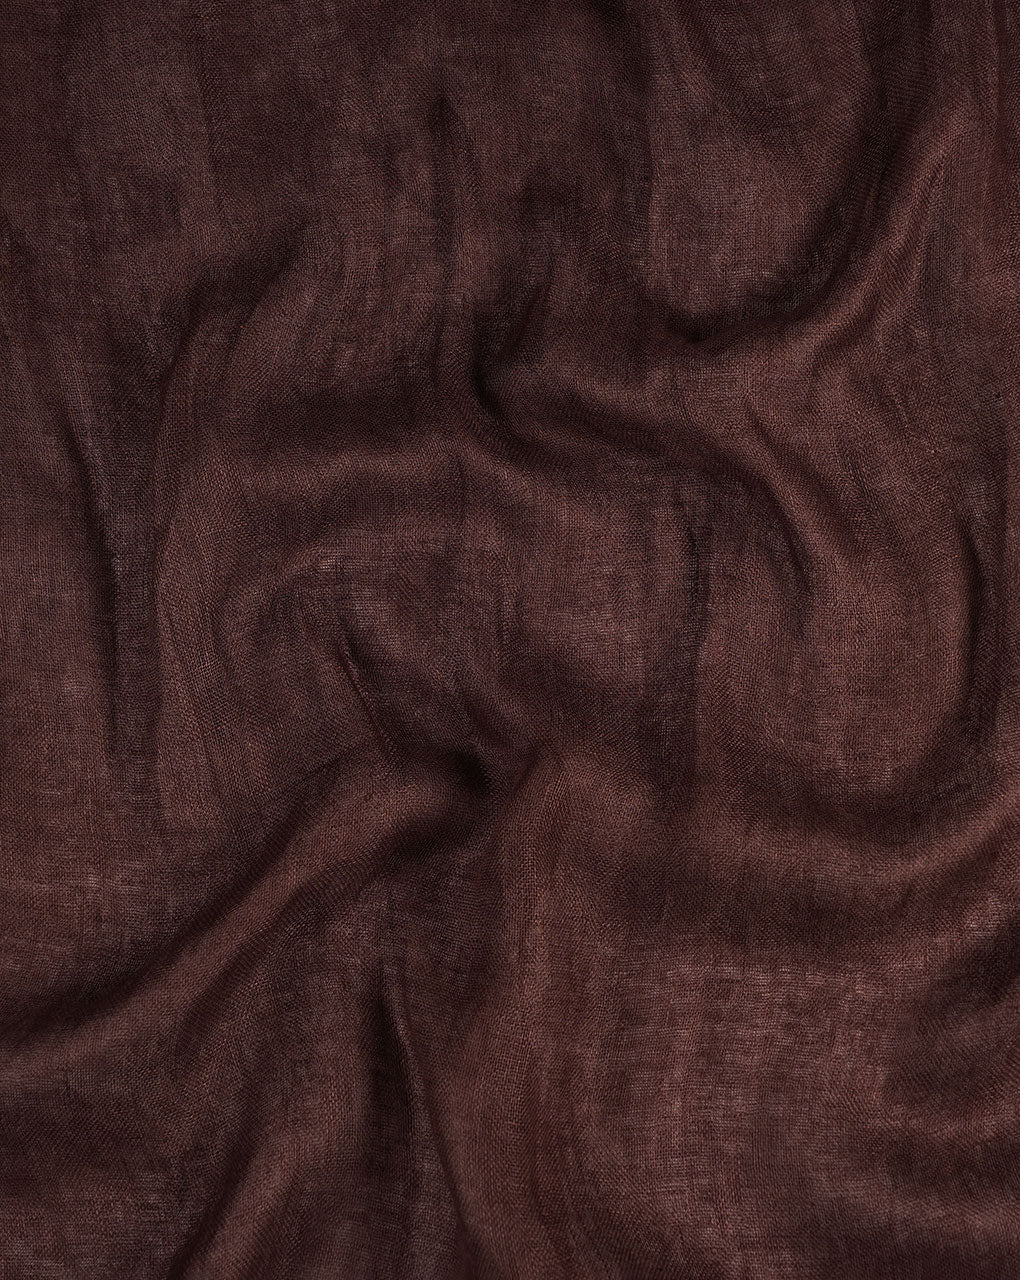 Dark Brown Plain Woven Bhagalpuri Linen Stole - Fabriclore.com